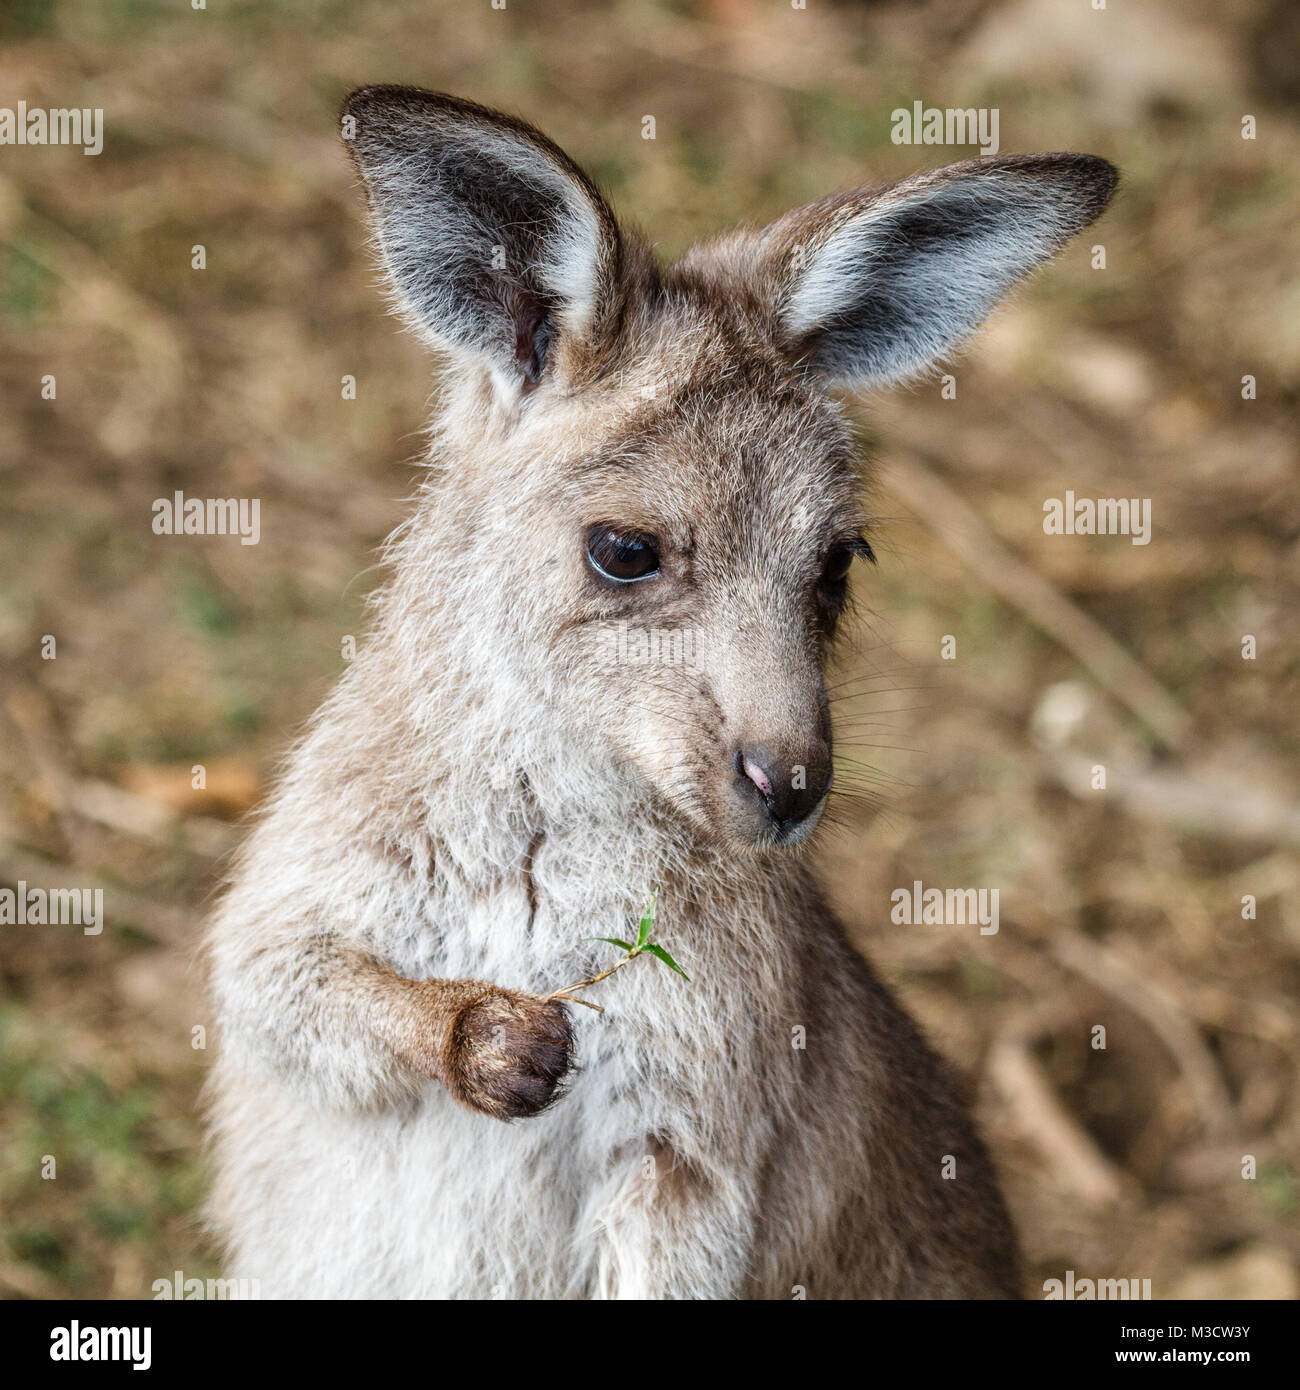 Cute grey kangaroo joey, Queensland, Australia. Portrait. Square image. Stock Photo